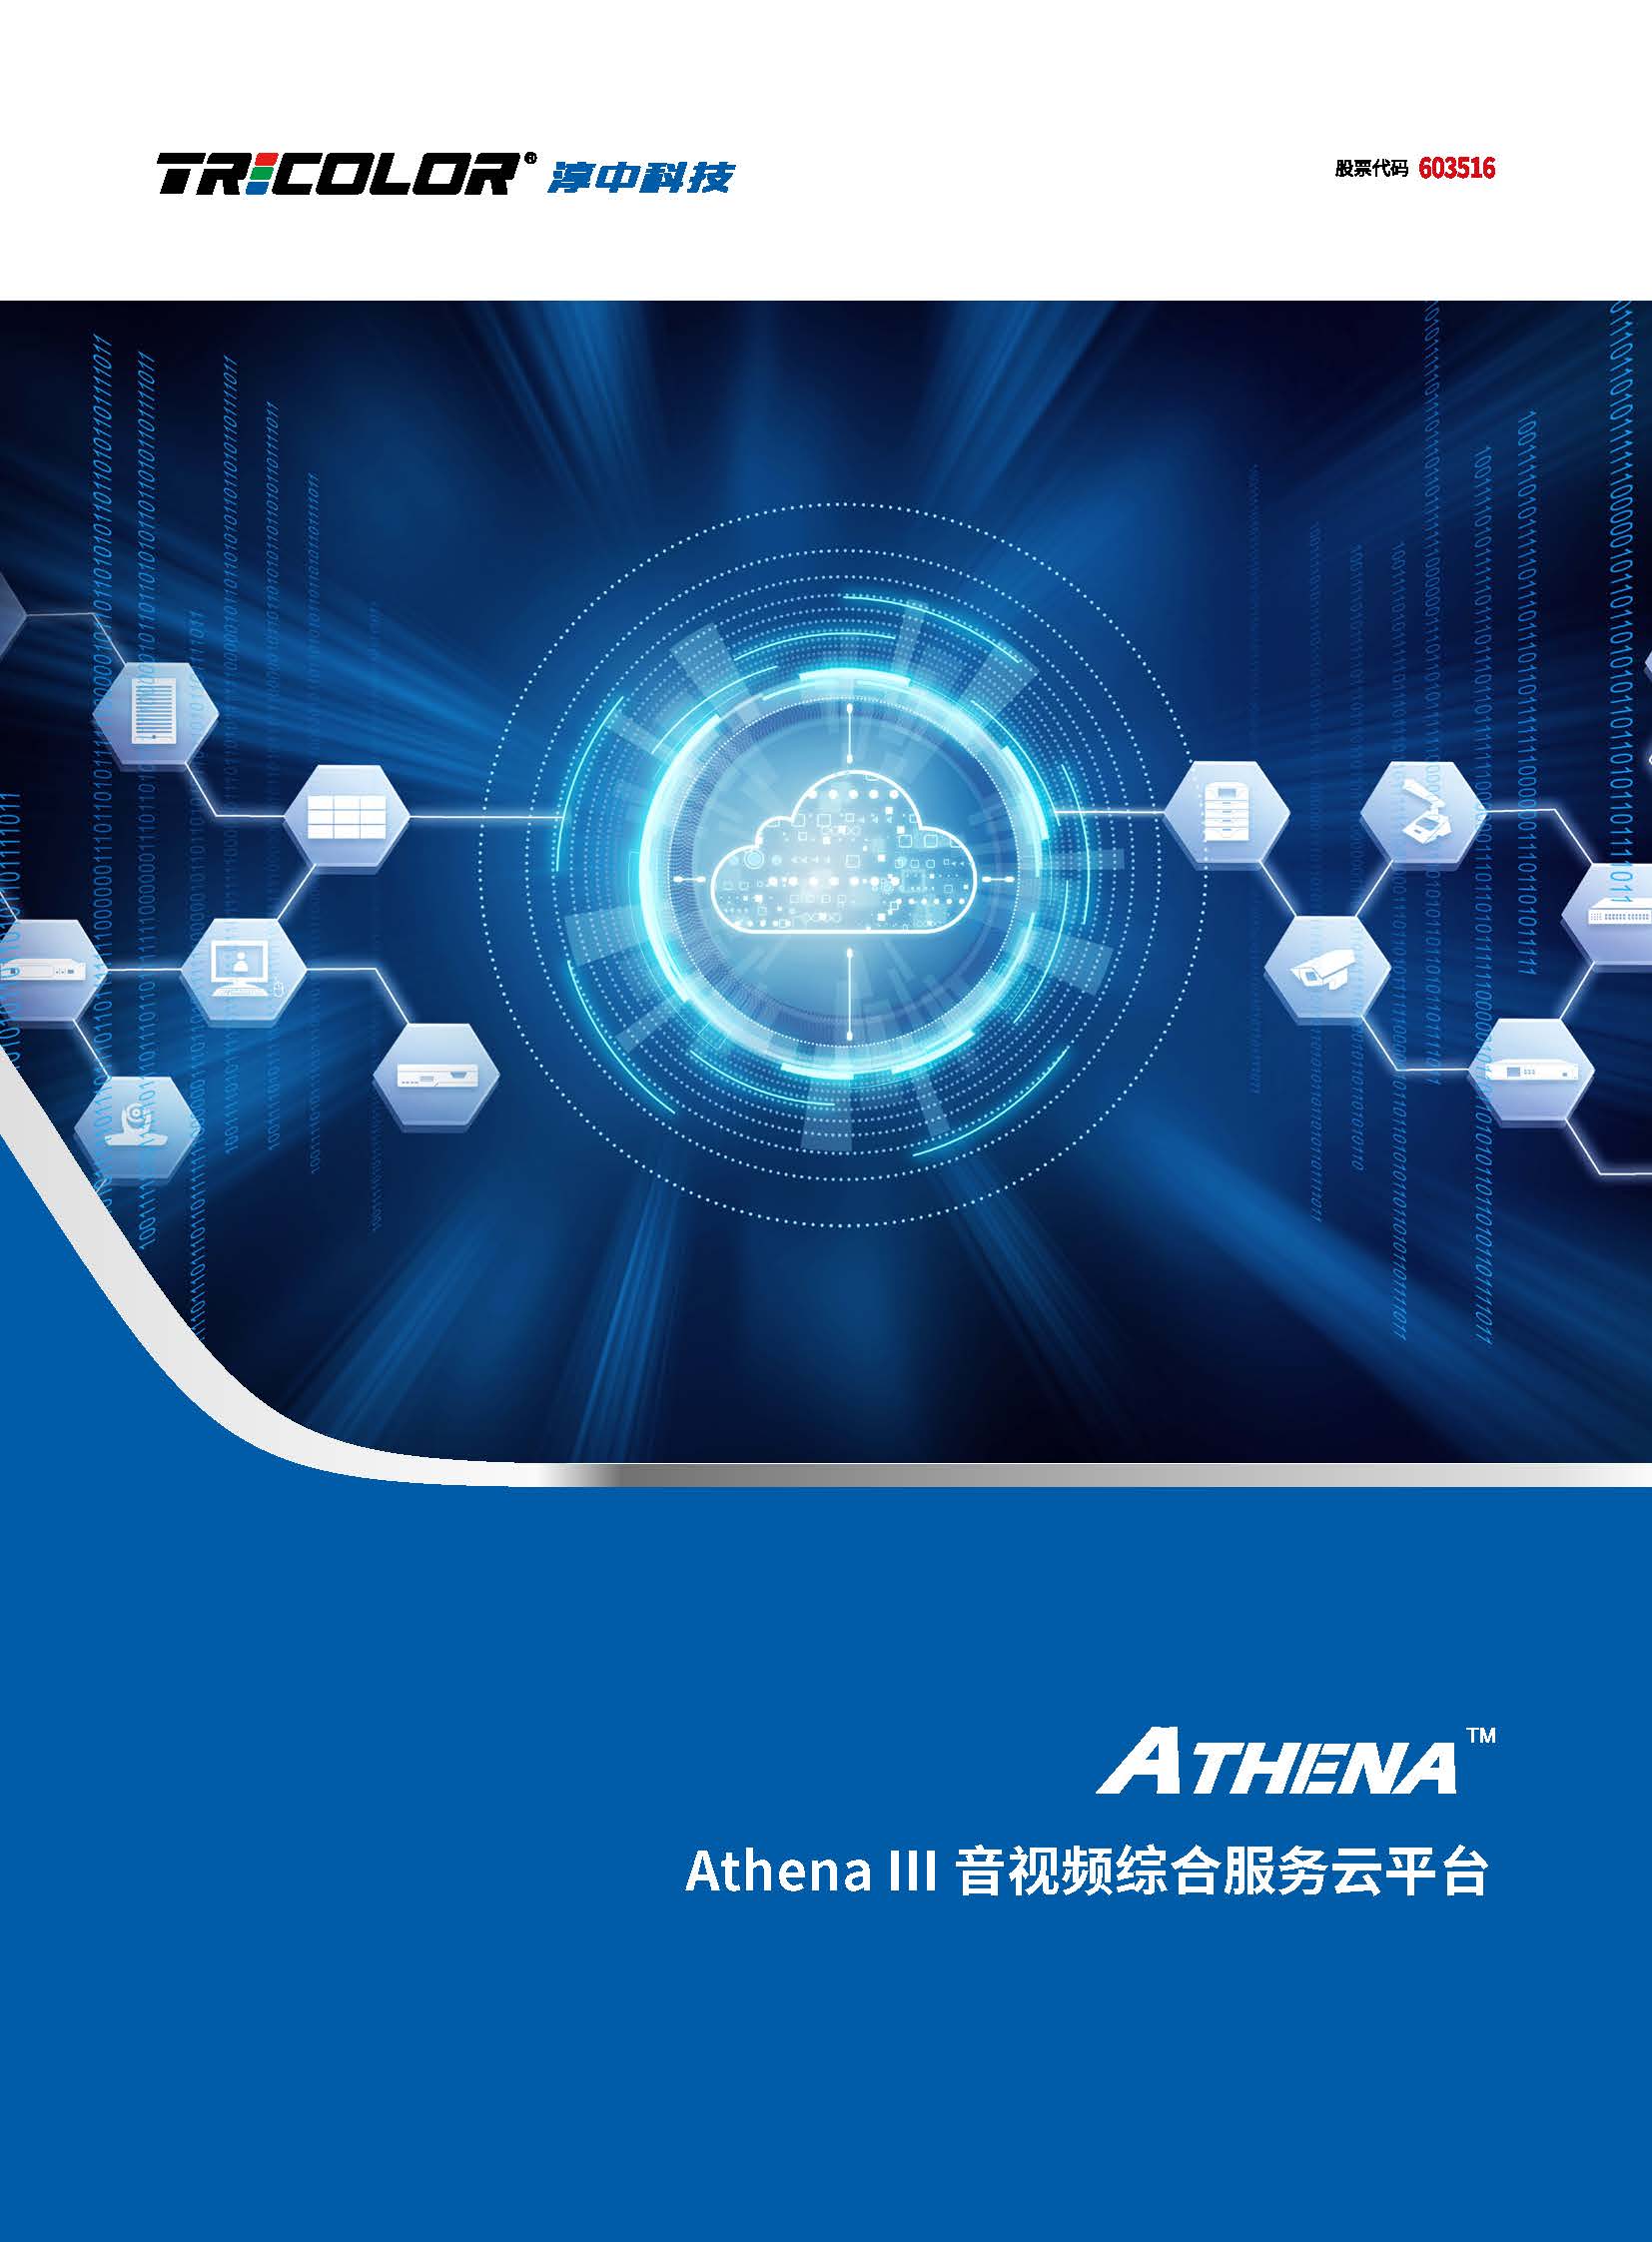 Athena III音视频综合服务云平台彩页_页面_1.jpg